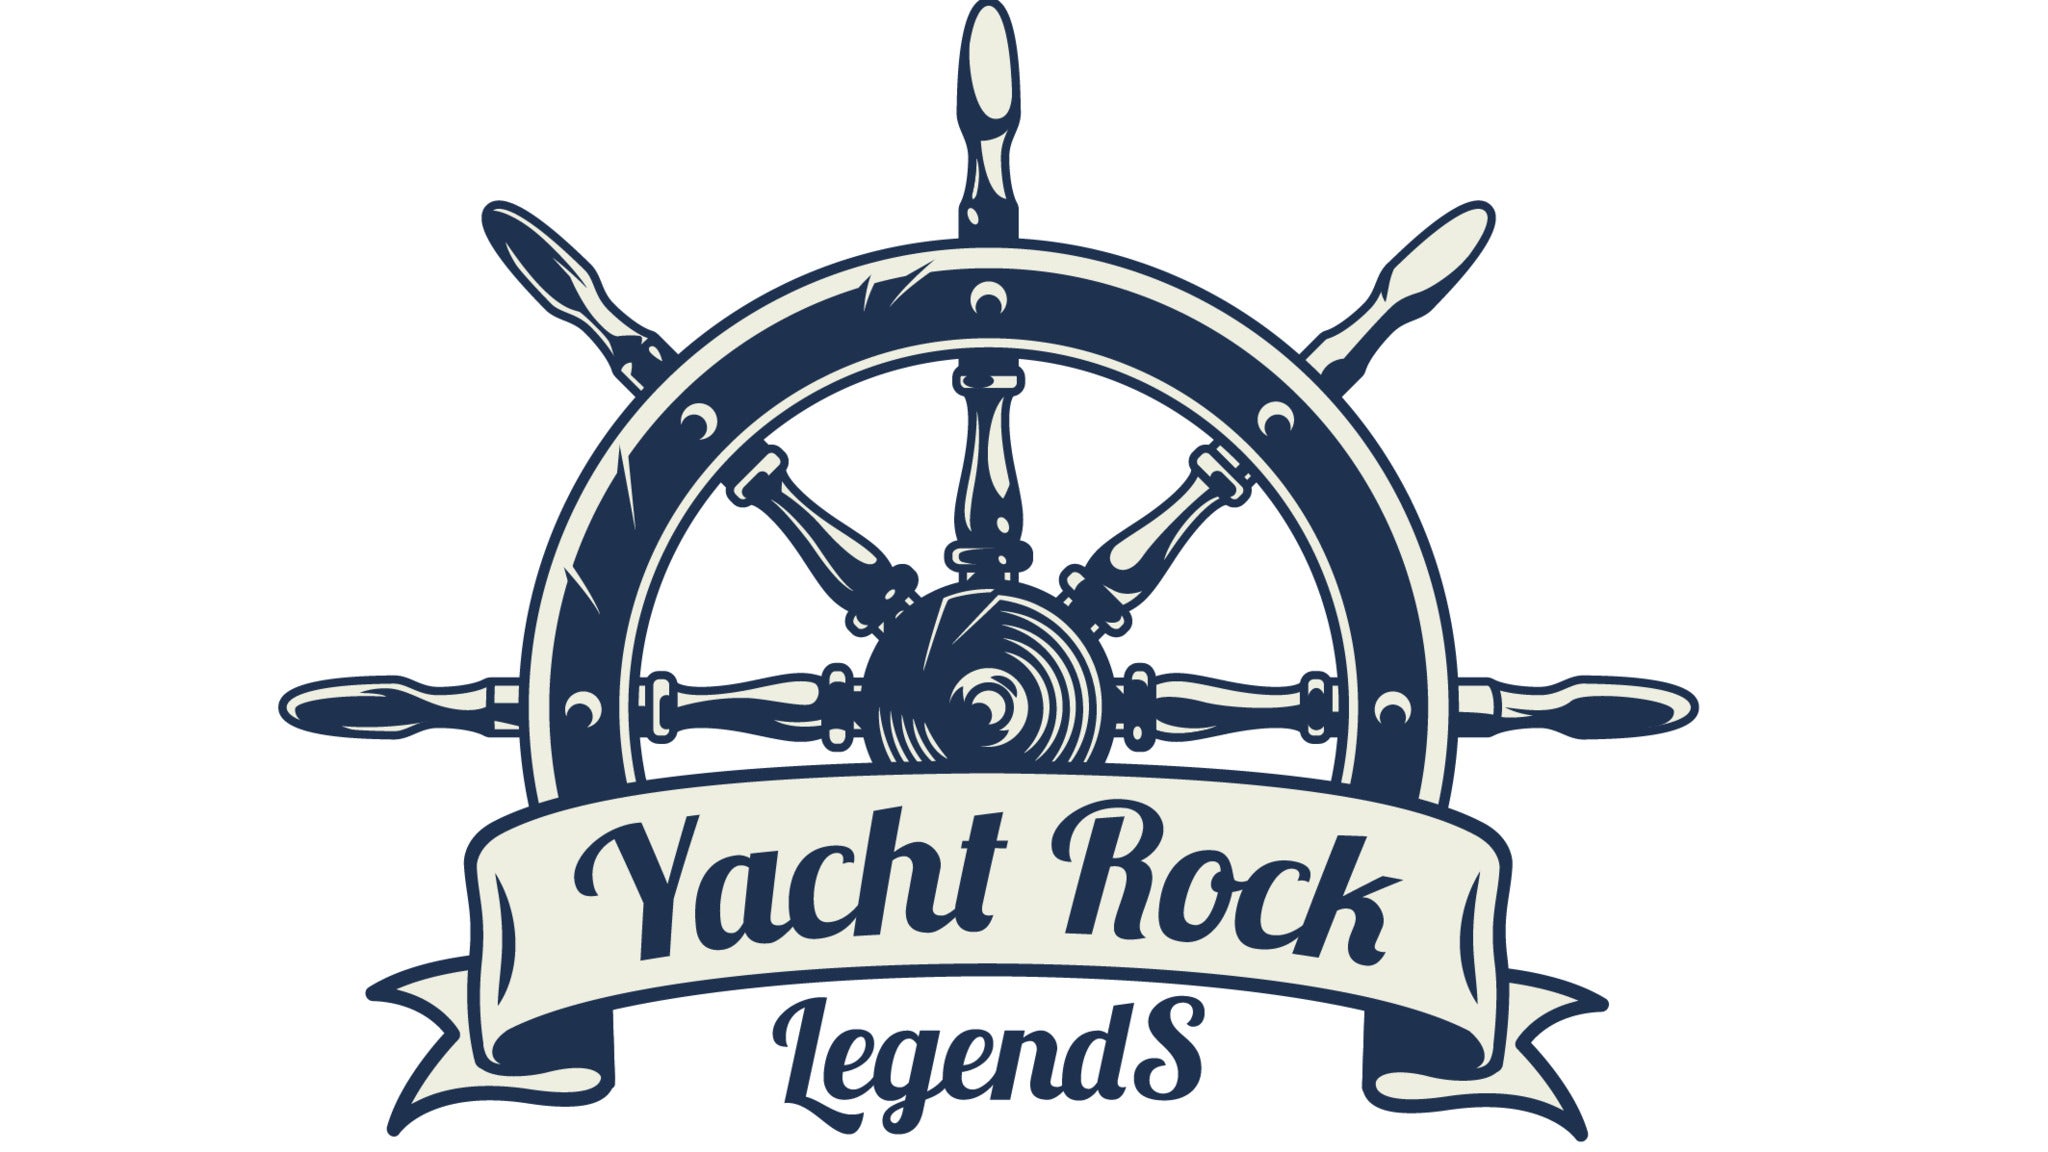 Yacht Rock Legends